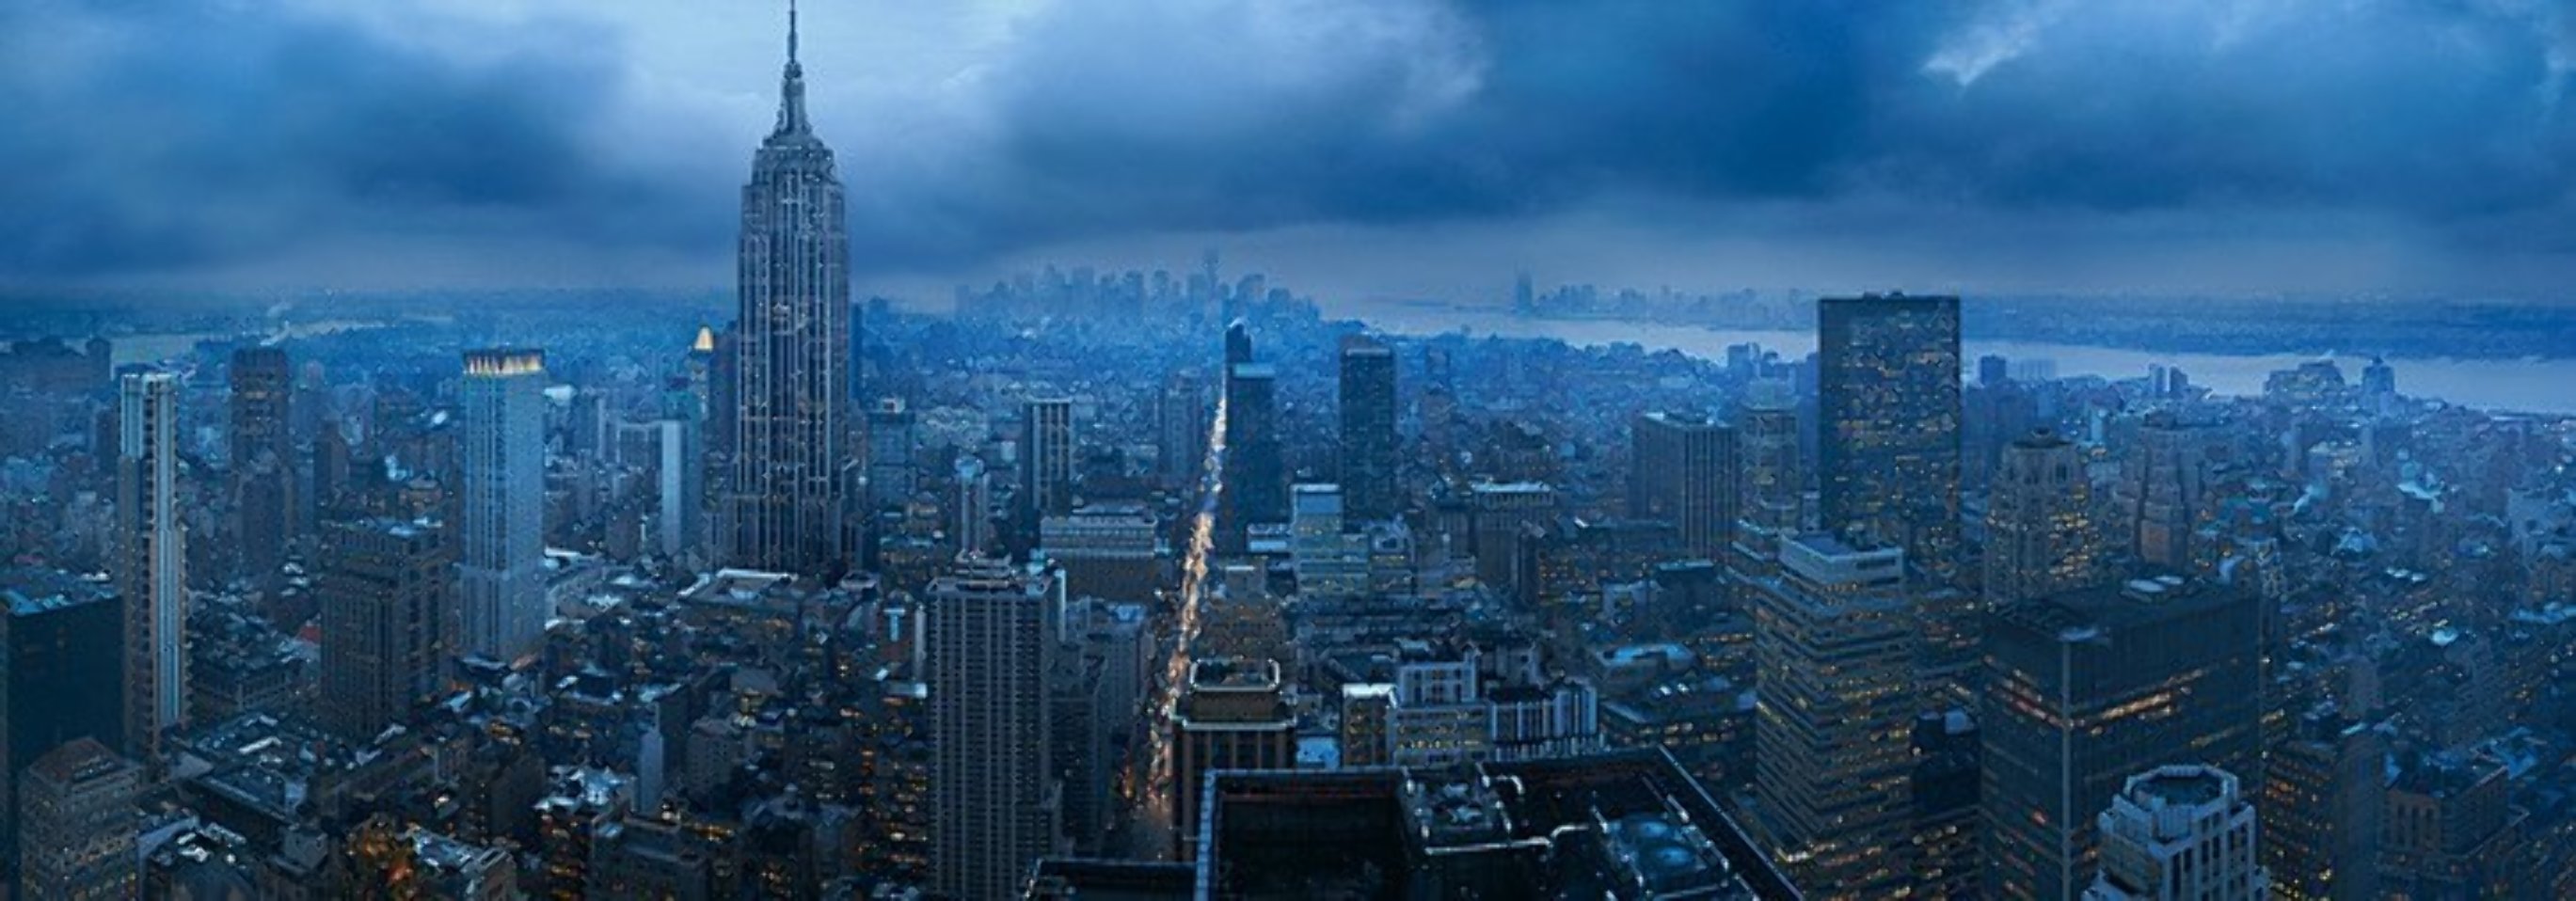 Gotham  New York 1.5M Huge Panorama by Peter Lik